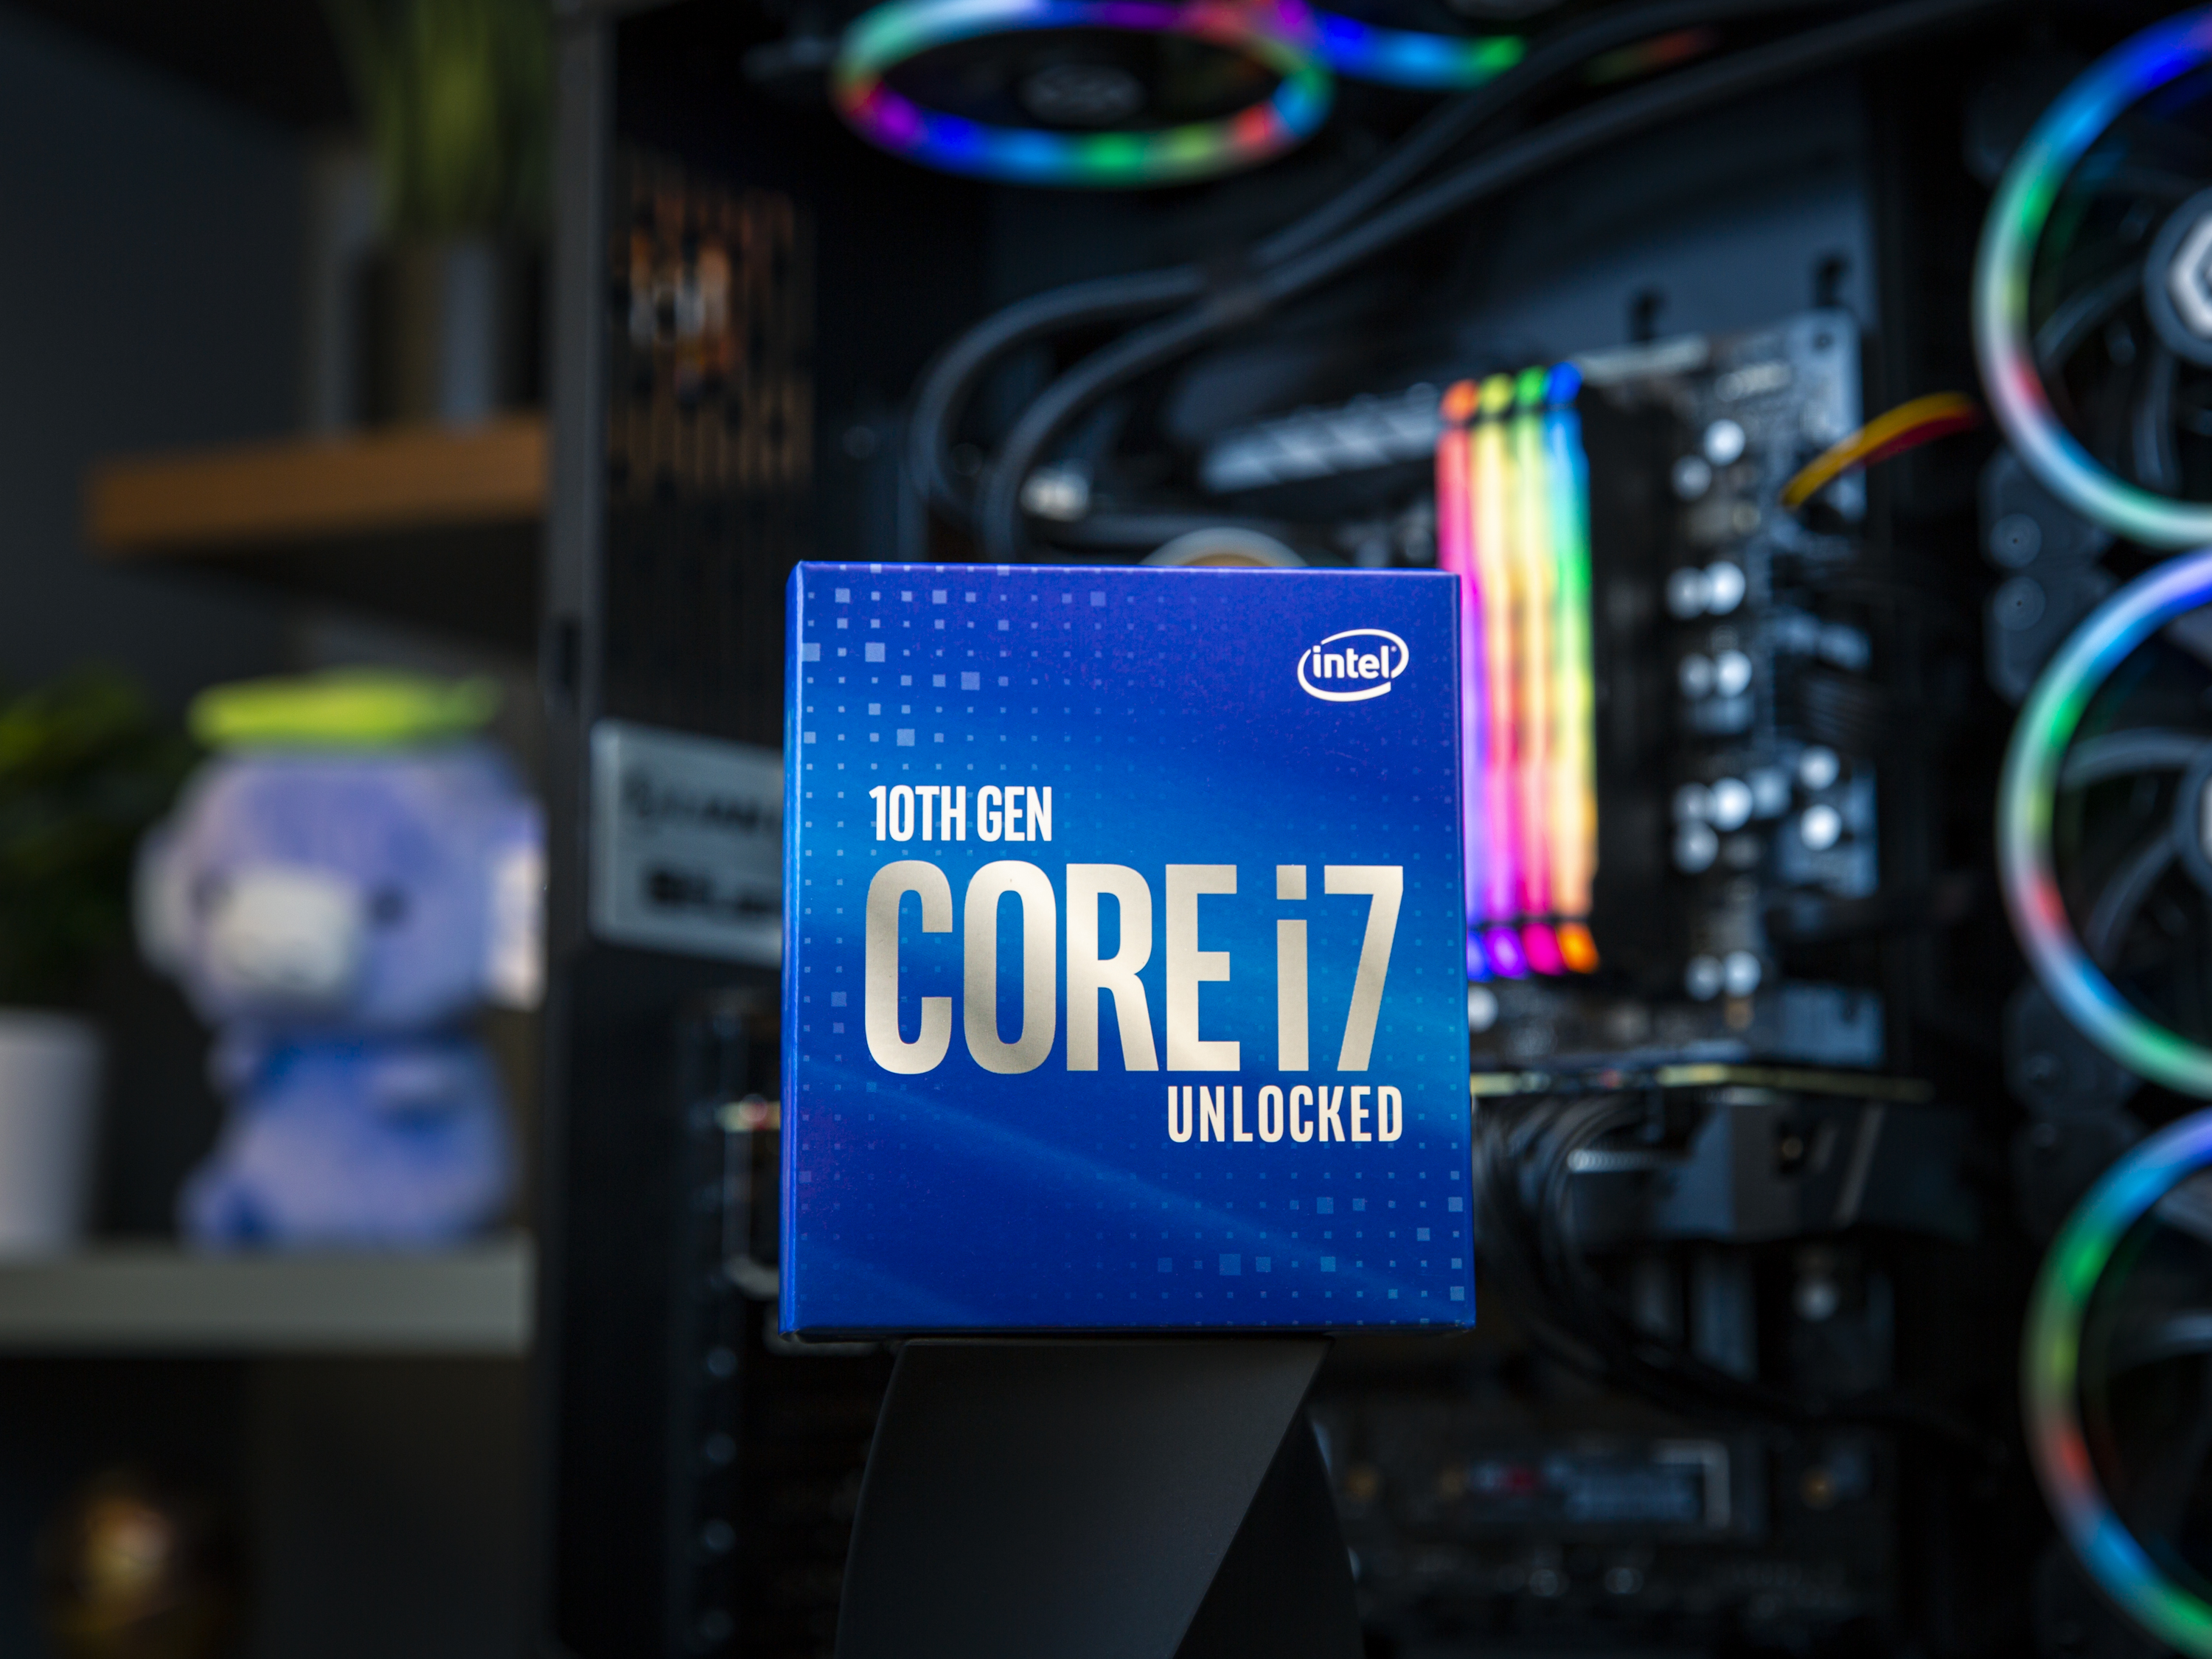 Core i7-10700K Application Benchmarks - Intel Core i7-10700K